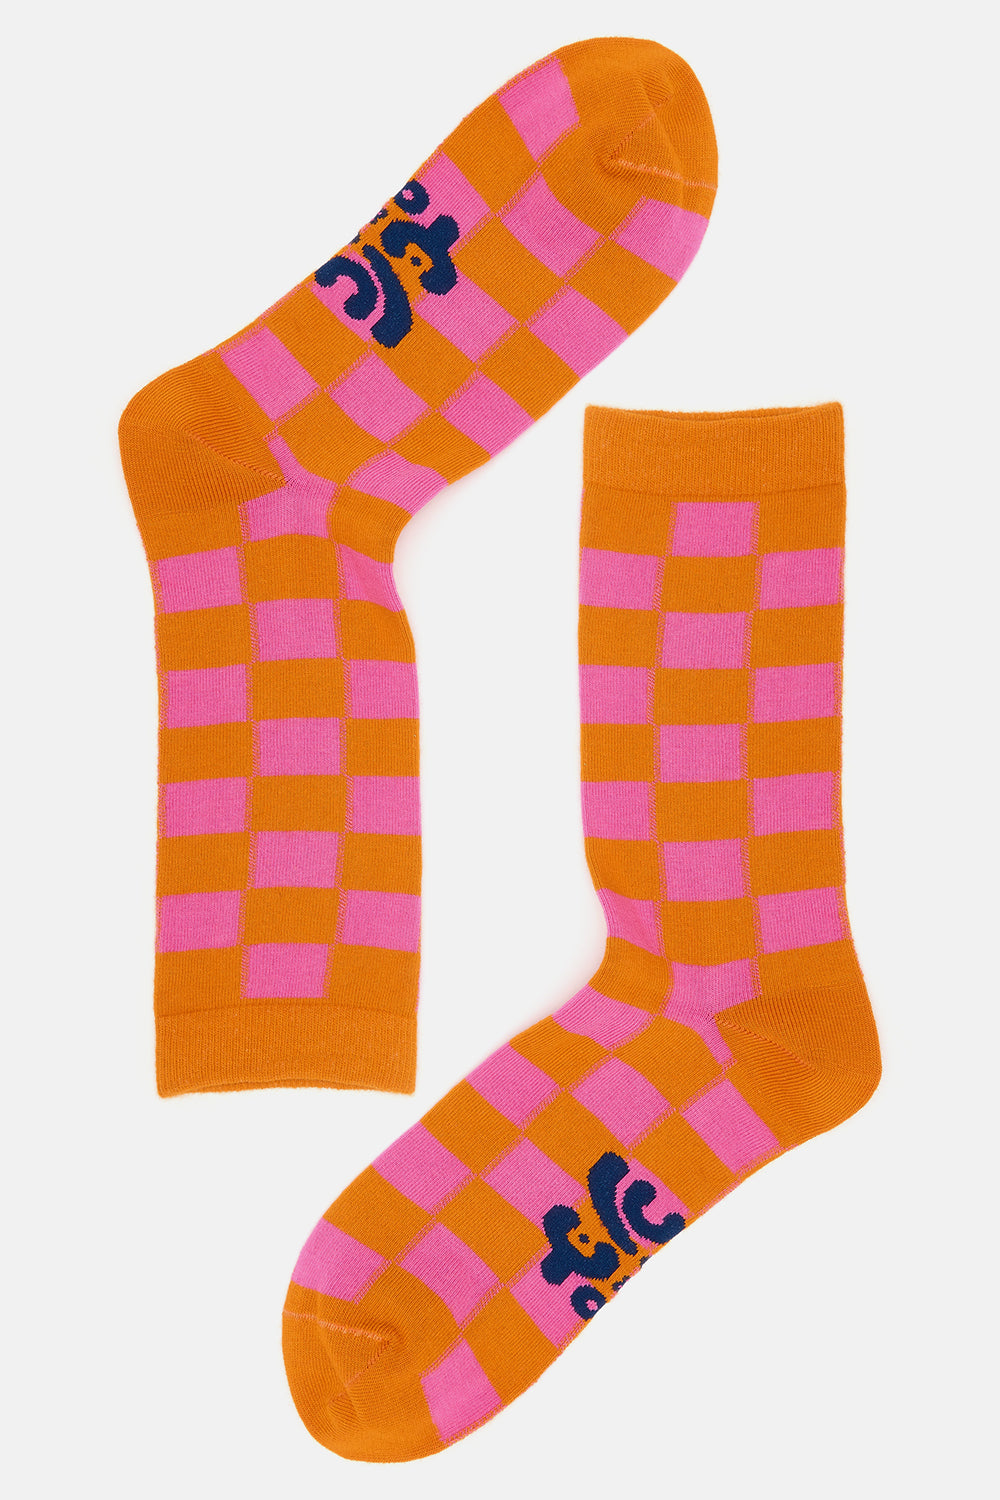 JoJo Socks: ORGANIC COTTON - Checkerboard Orange & Pink